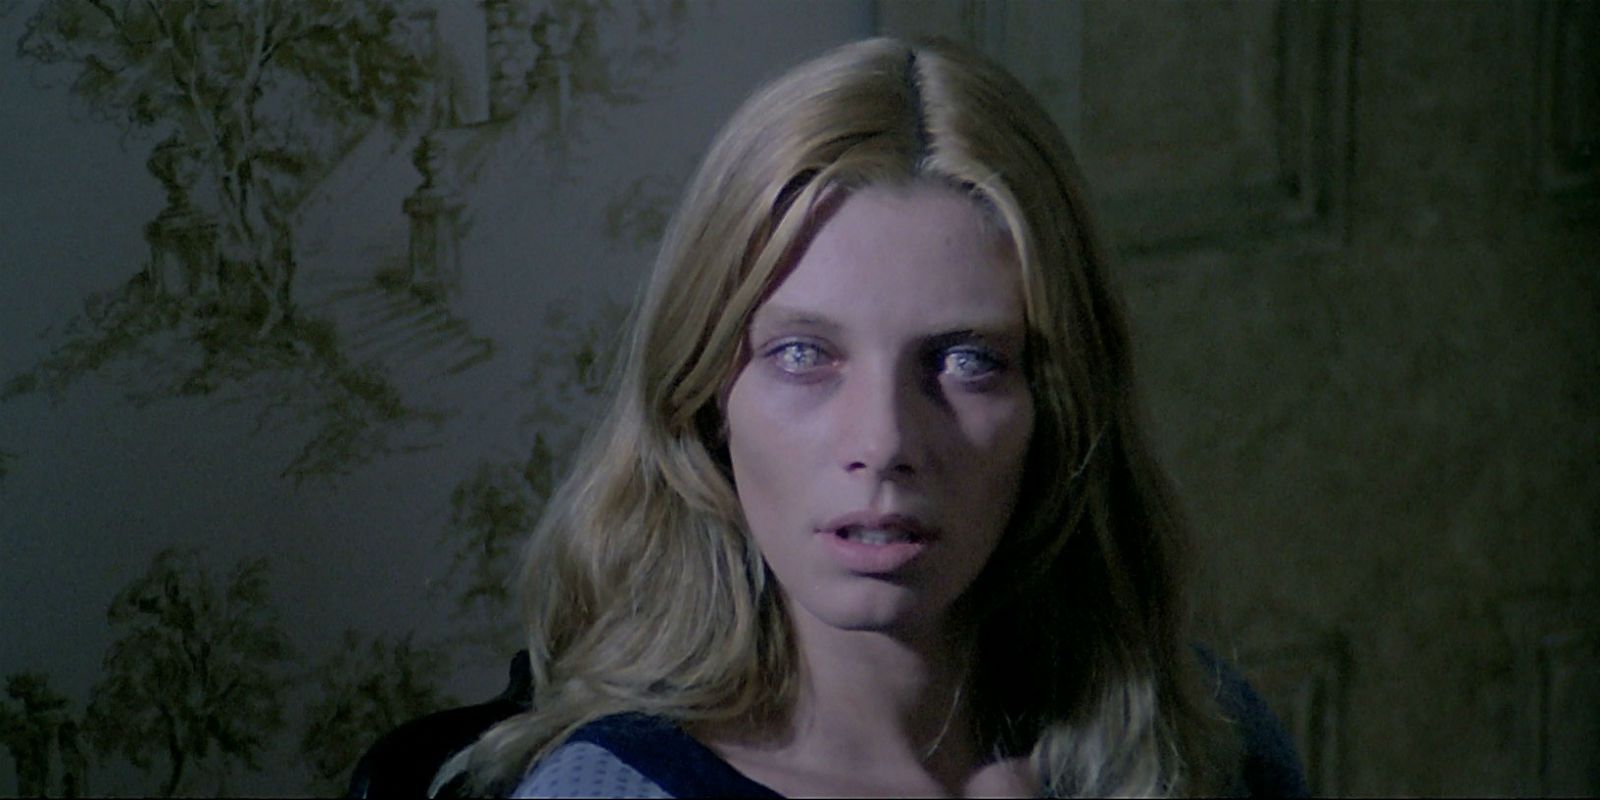 Scariest Horror Movies Ever 10 Highest Ranking Video Nasties (According To IMDb)